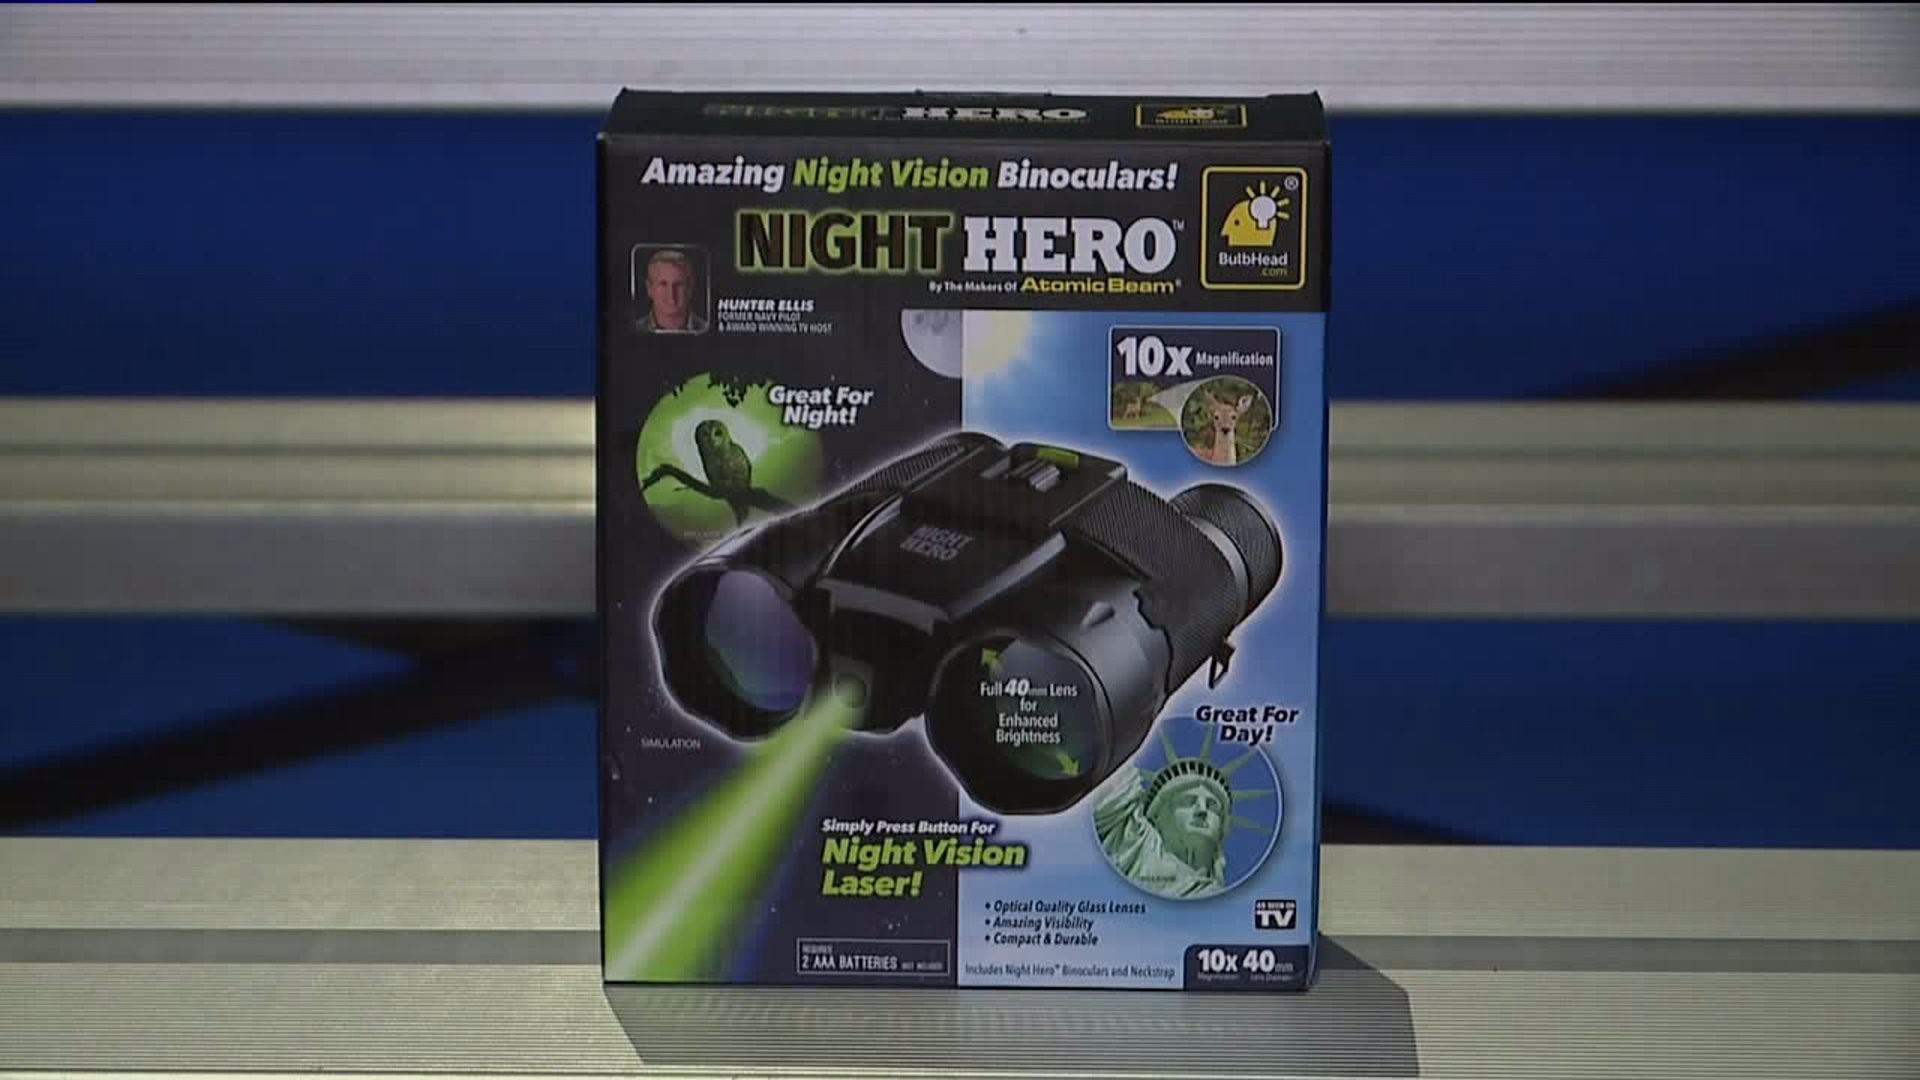 Does It Really Work: Night Hero Binoculars